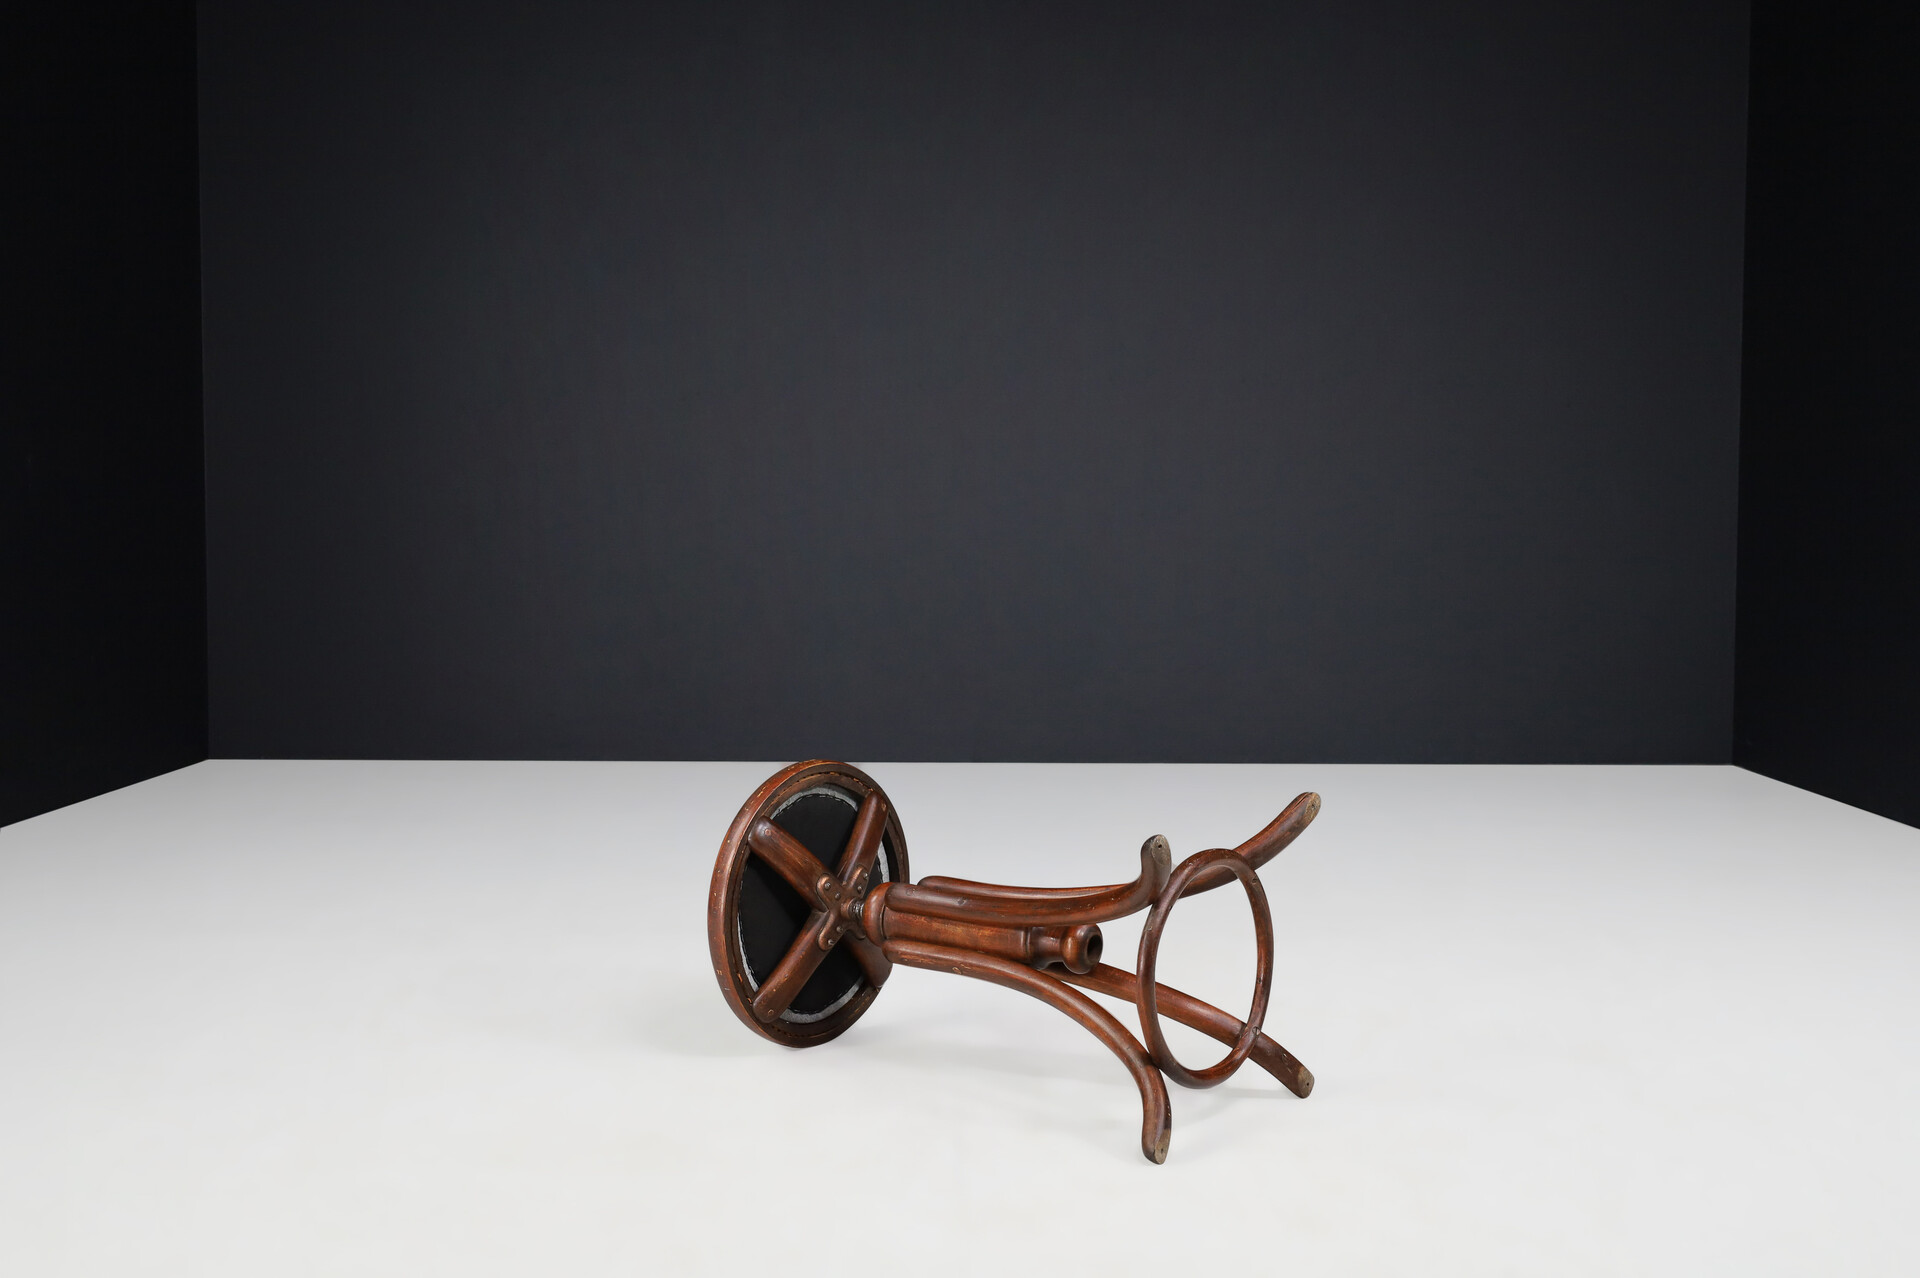 Antique Adjustable Tabouret Stool By Thonet, Austria 1910 20th century